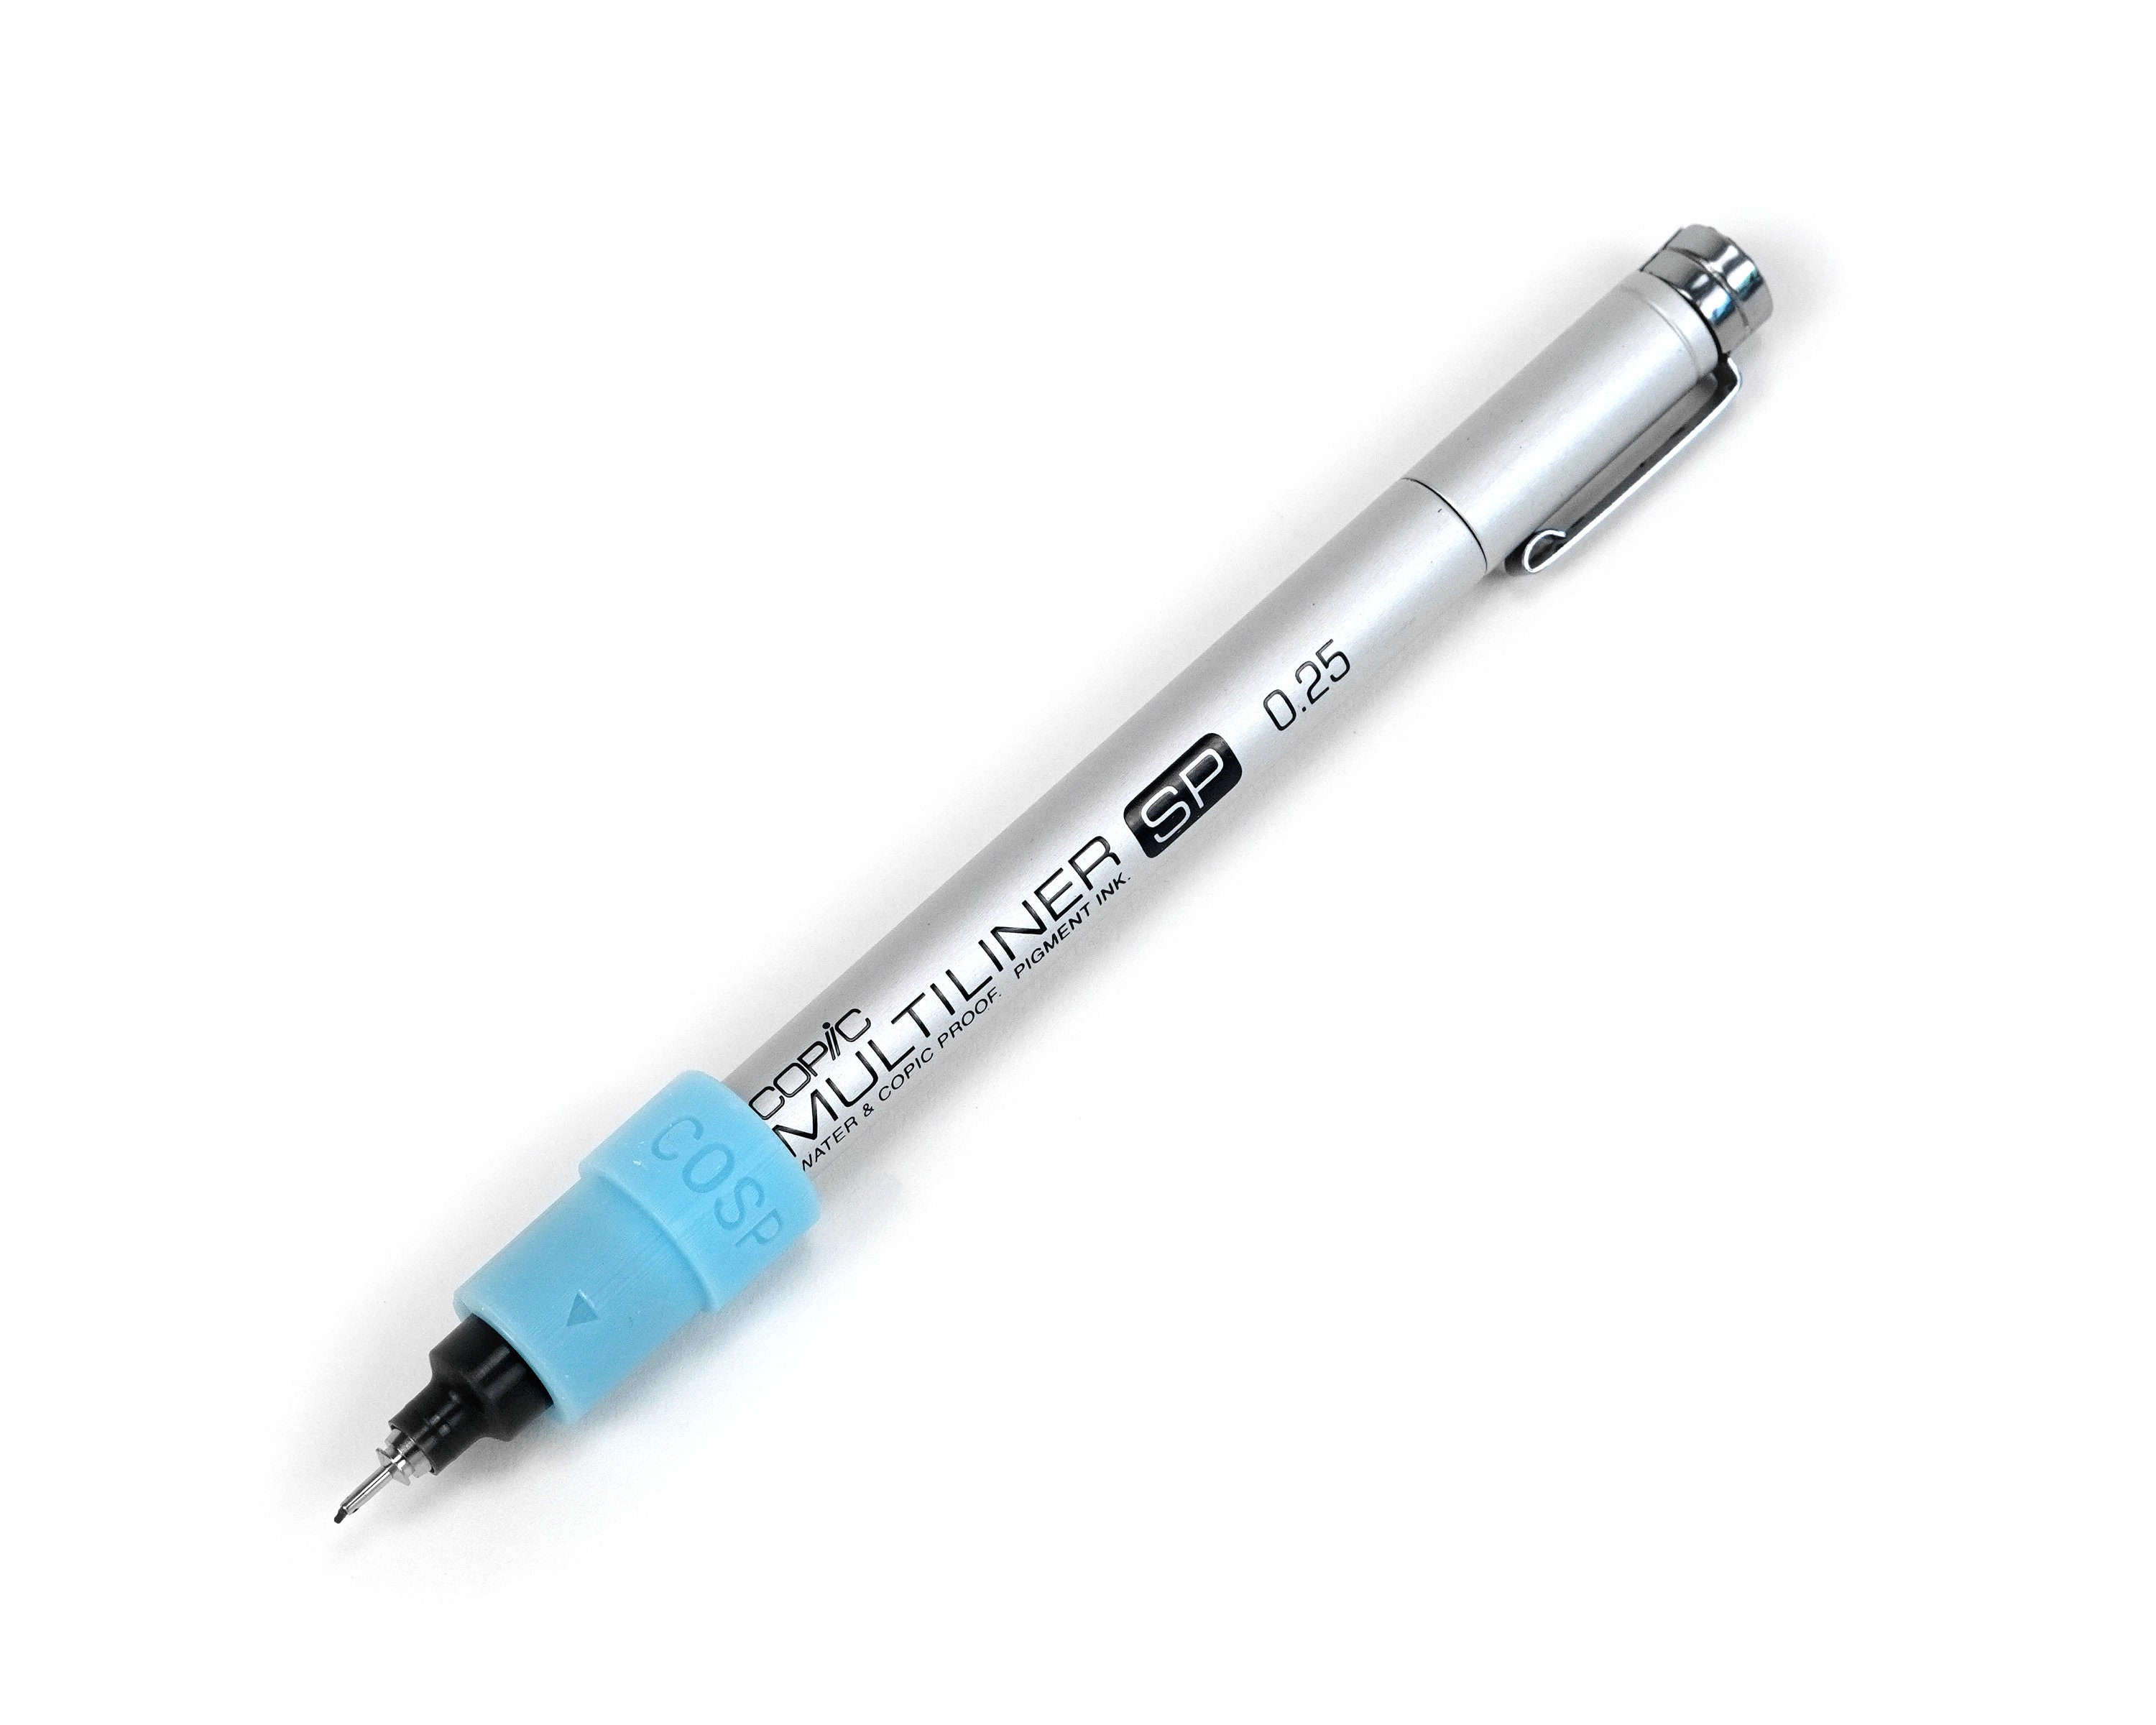 Premium Cricut Pen Adapter Pack for Explore Air, Air 2, Air 3 and